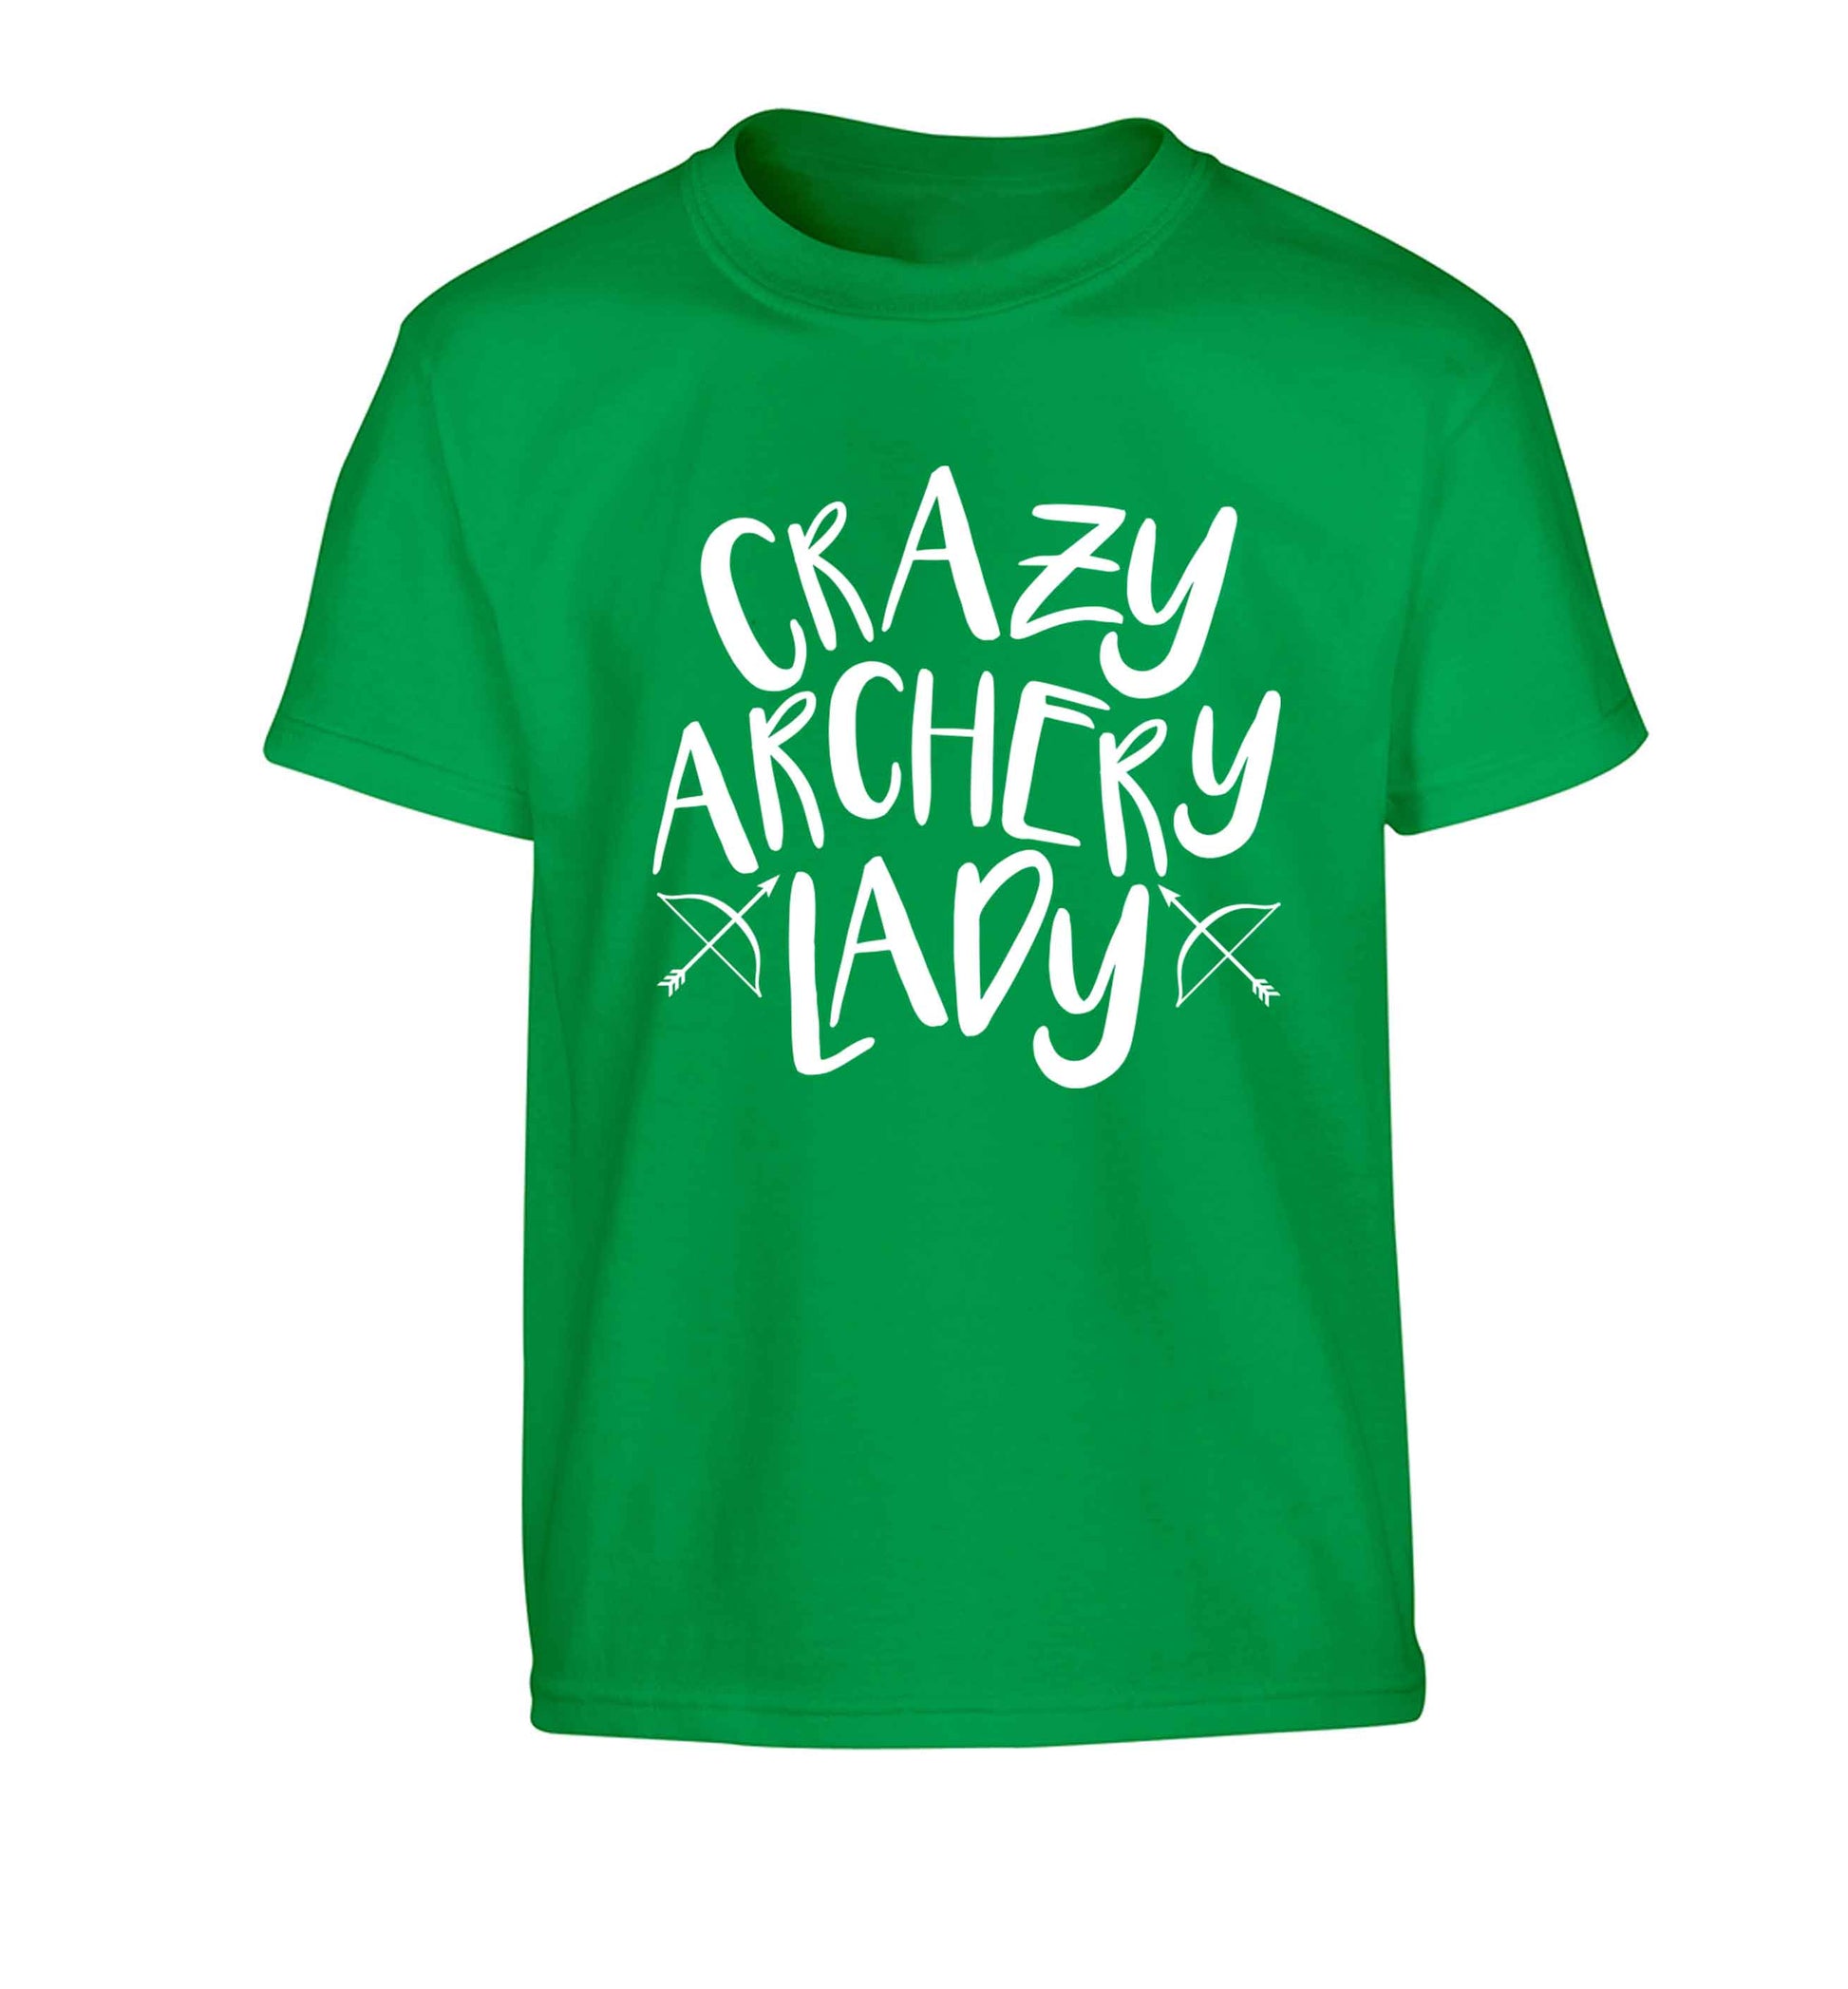 Crazy archery lady Children's green Tshirt 12-13 Years